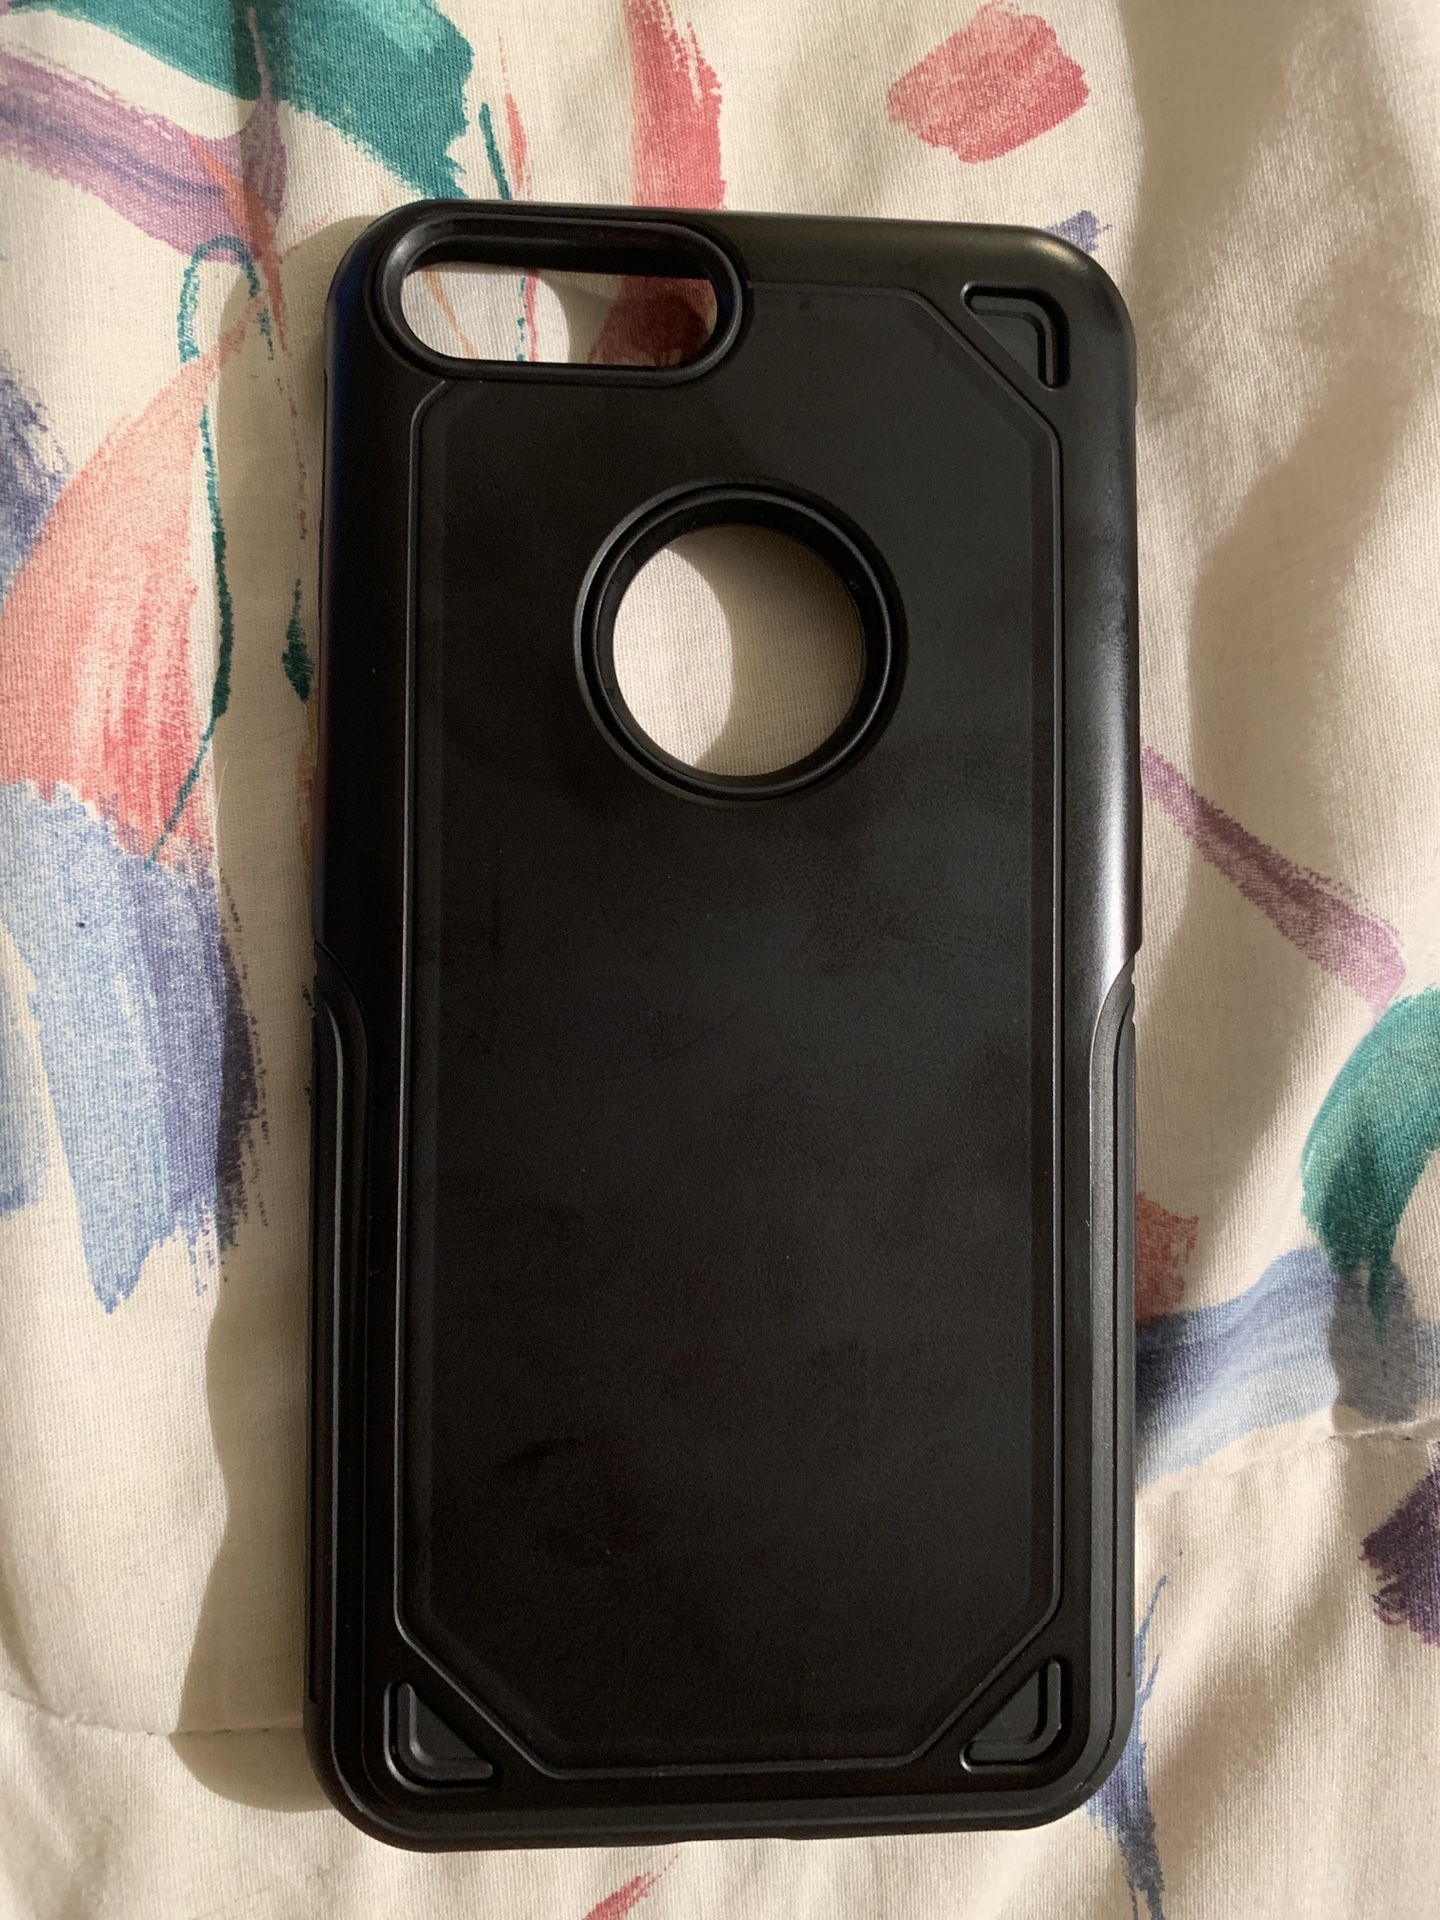 Black IPhone 8 Plus Case Plastic Exterior With Rubber-Like Interior Casing